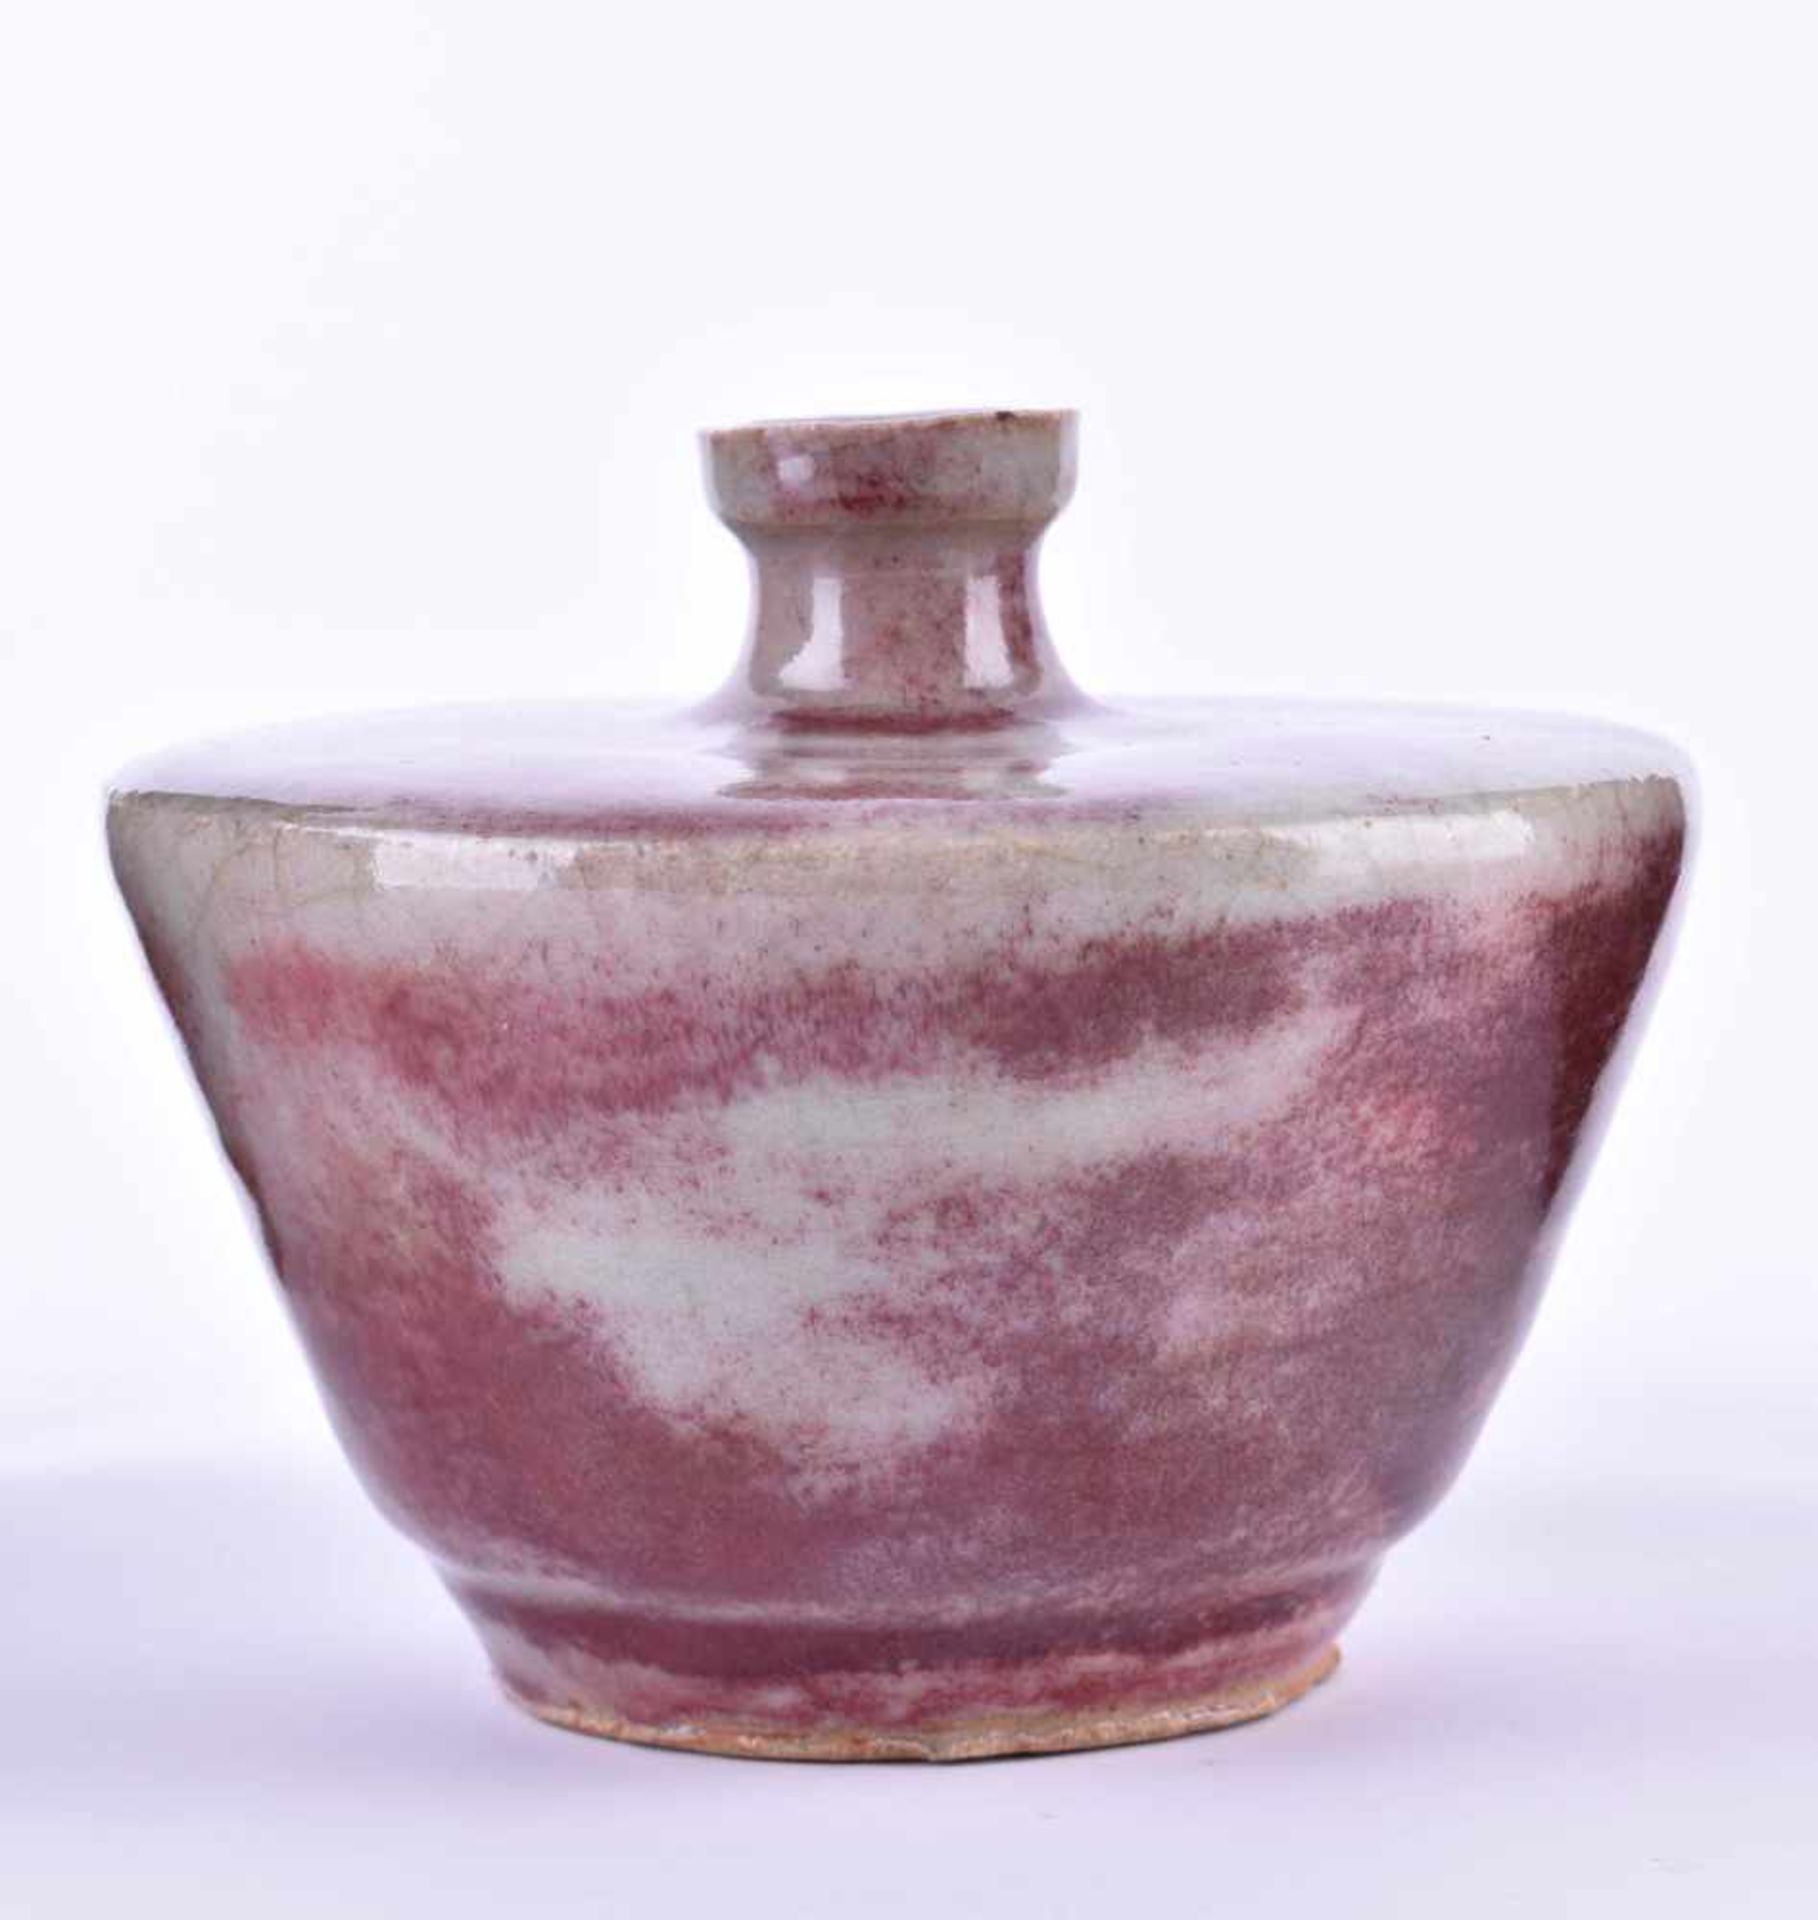 Vase China Qing DynastieOchsenblutglasur, H: ca. 11.5 cmVase China Qing Dynastyox blood glaze, - Image 2 of 5